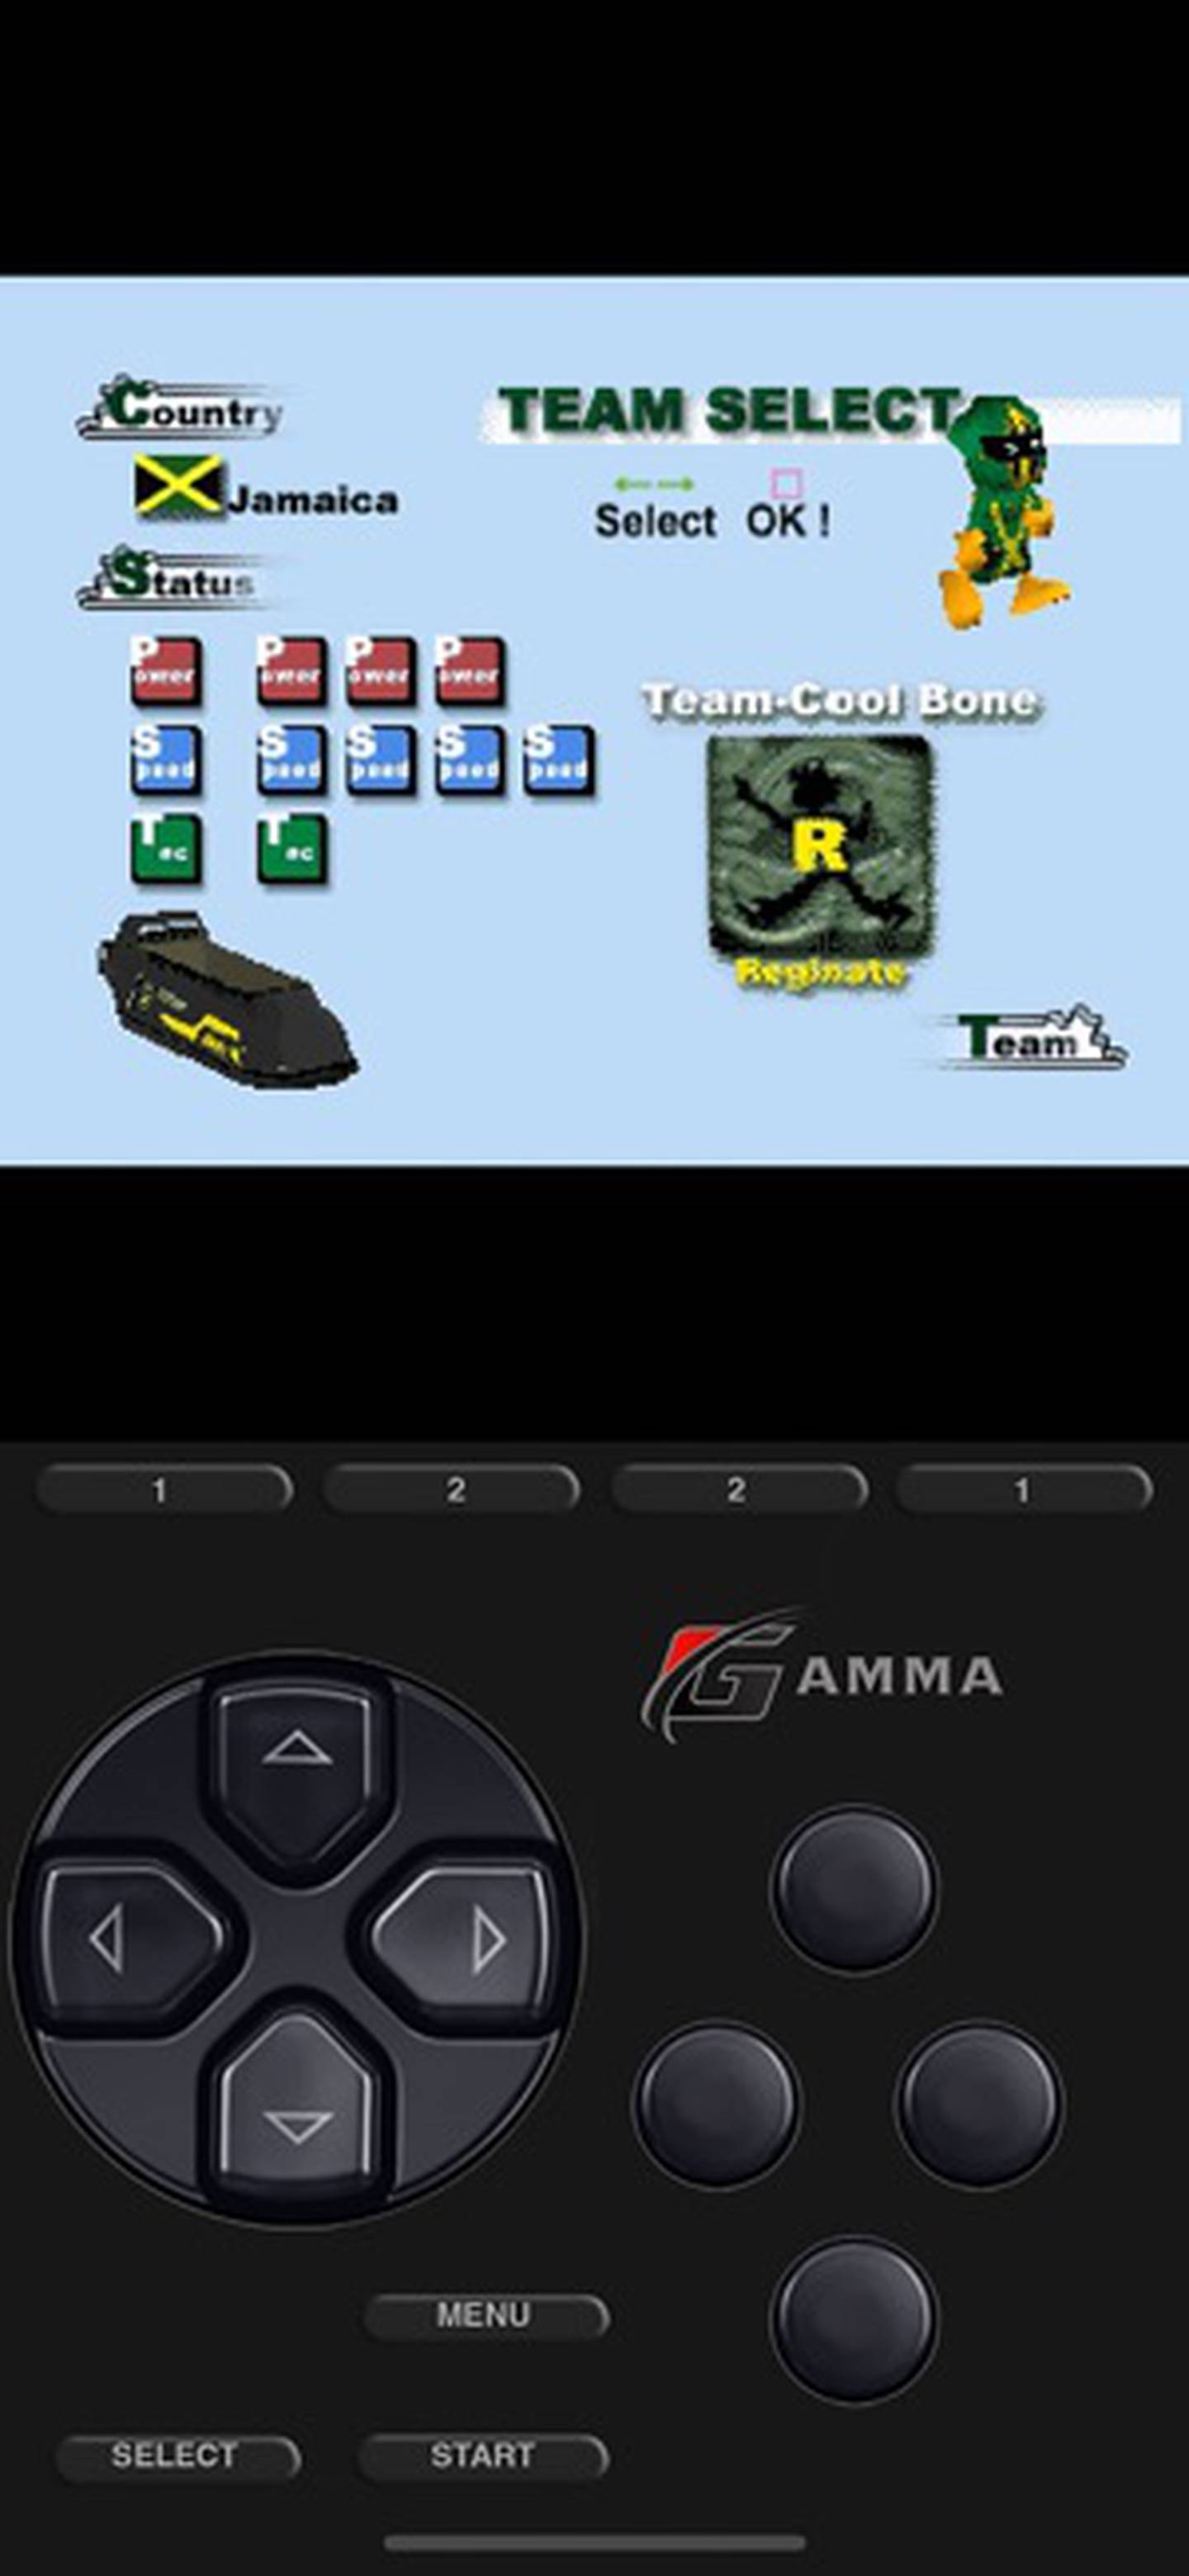 La interfaz de Gamma es muy similar a la del resto de emuladores. Foto: Apple Store.